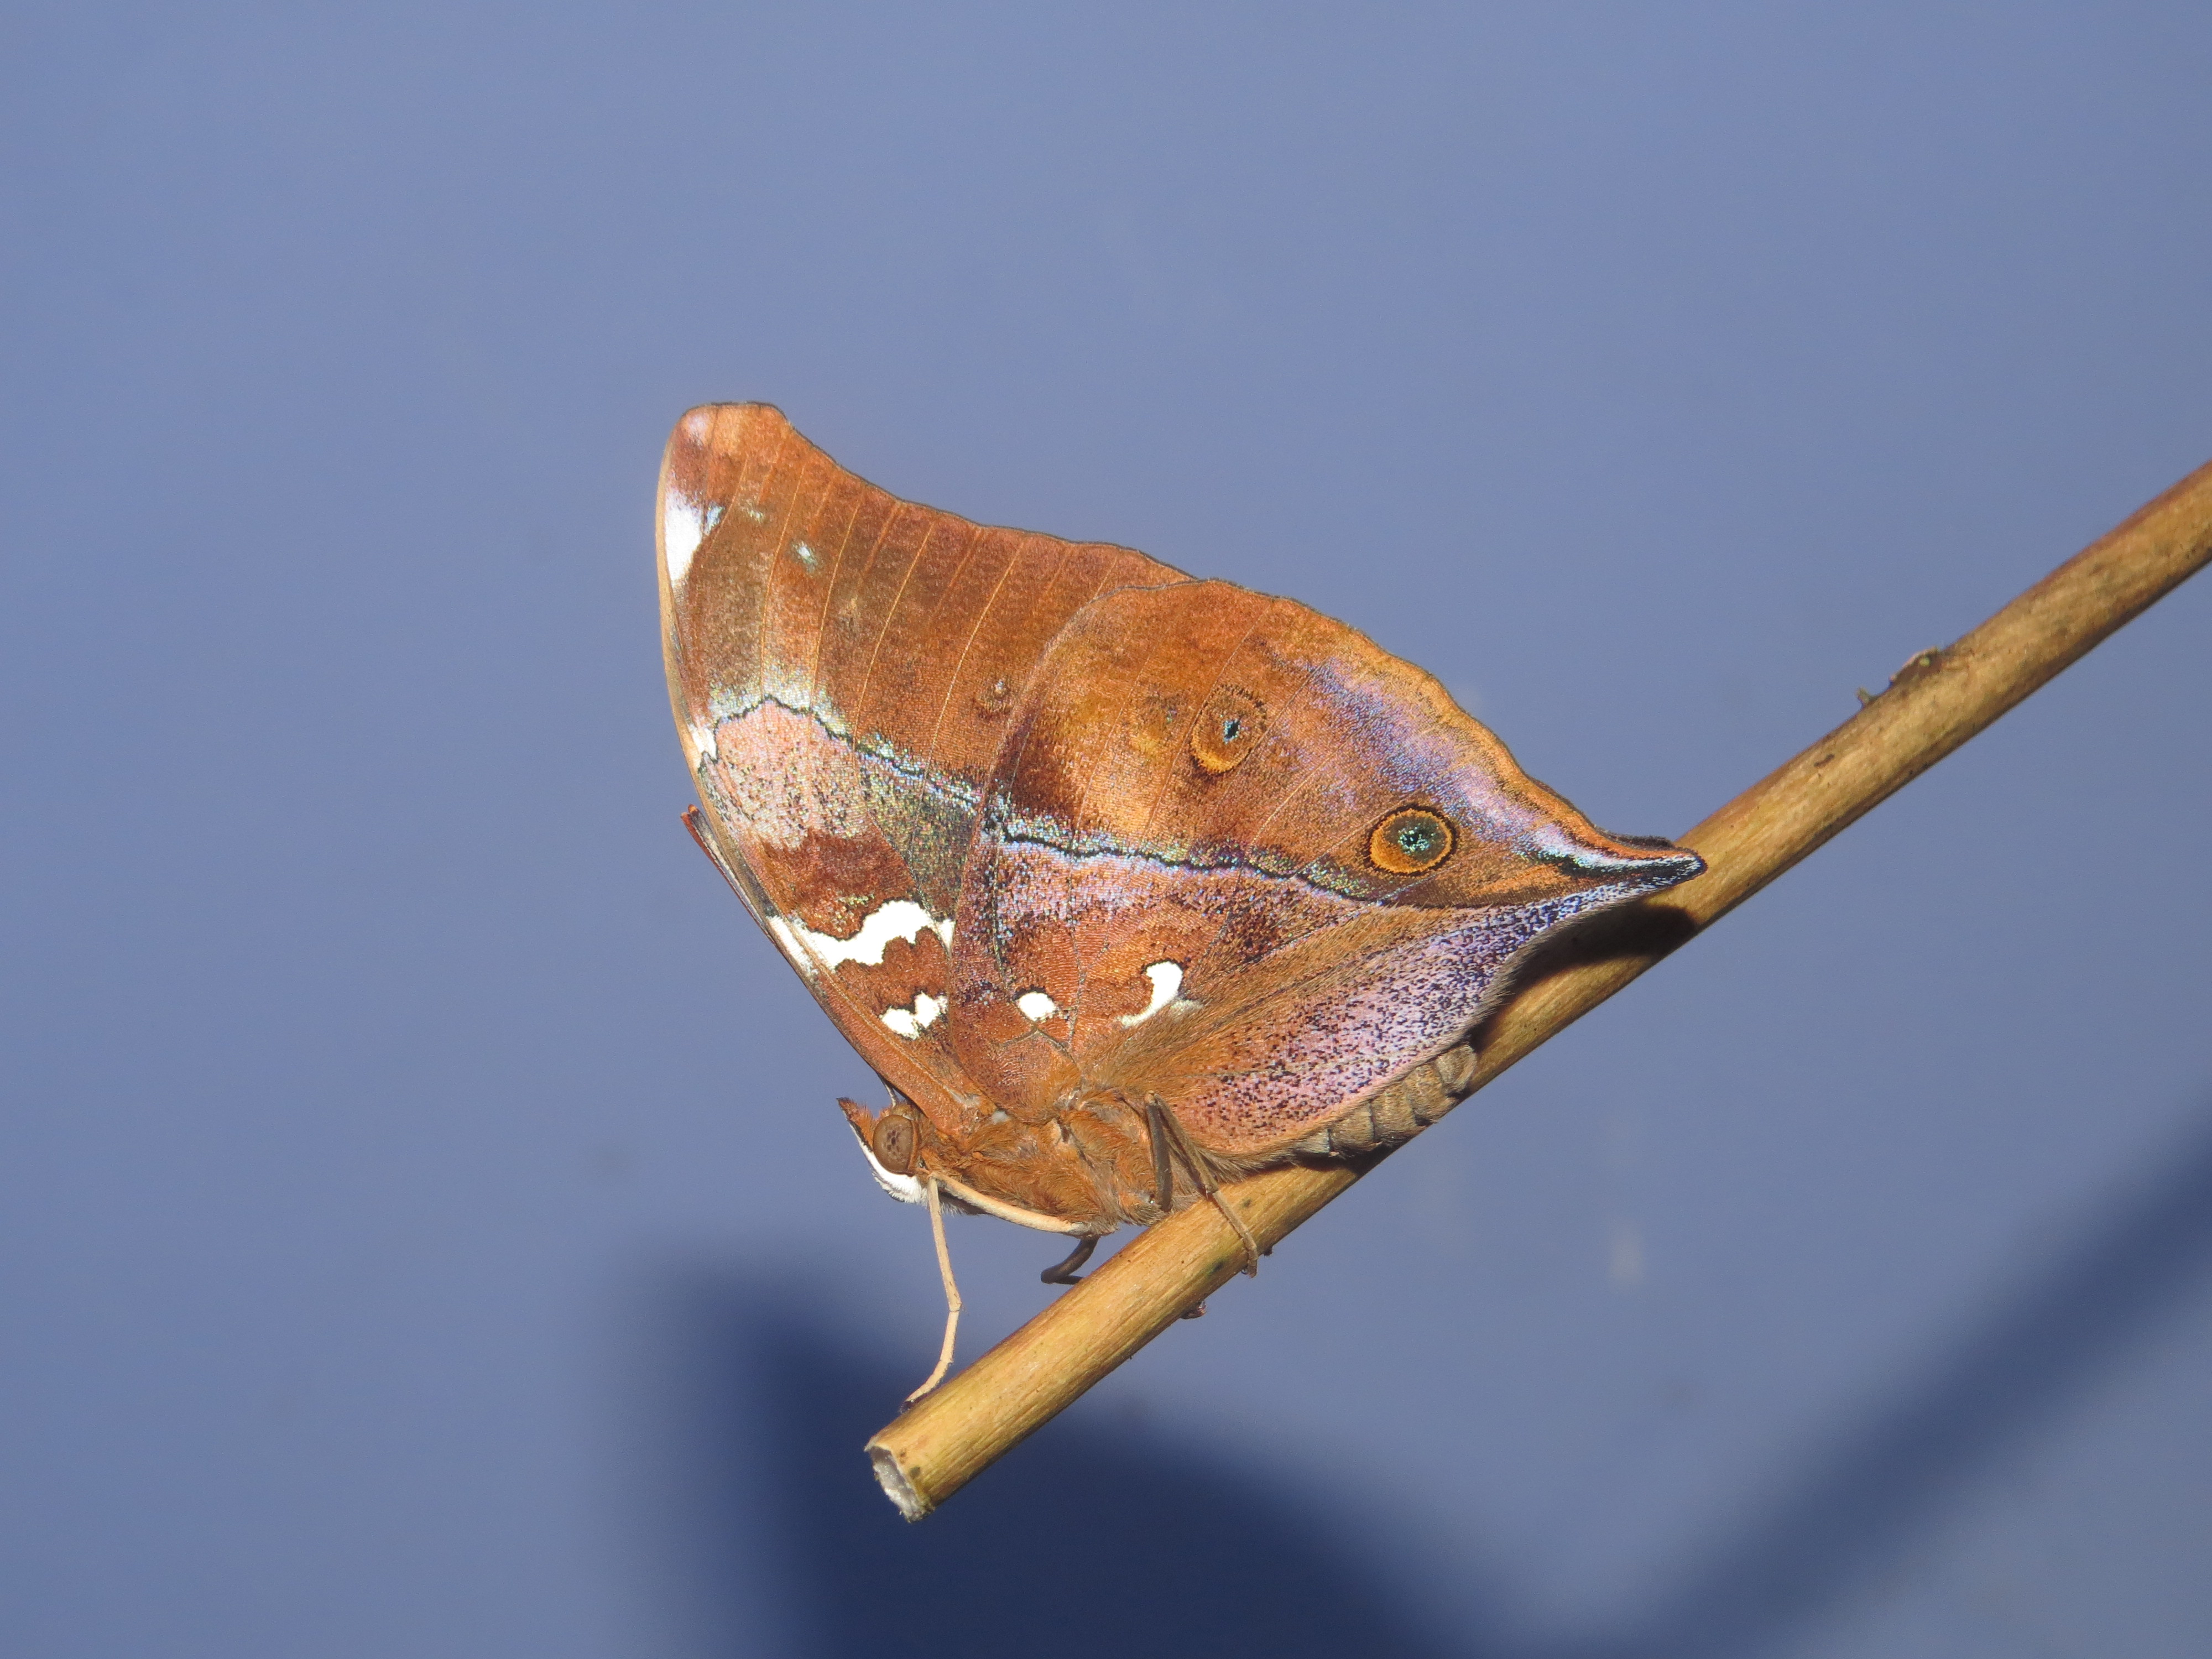 Newly eclosed Doleschallia bisaltide malabarica Fruhstorfer, 1899 – Malabar Autumn Leaf butterfly at Madayipara (10)